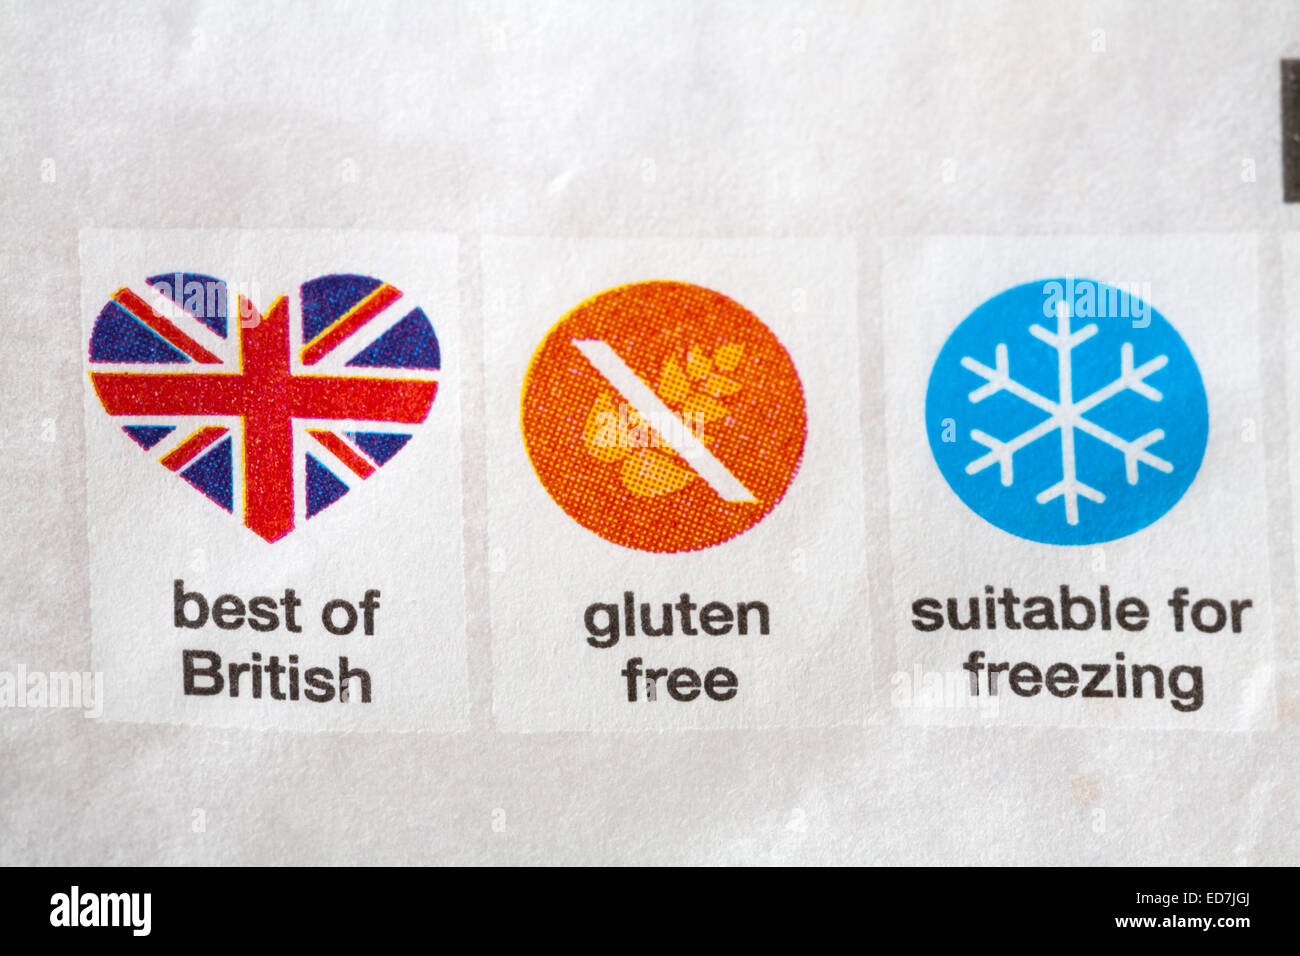 best of British gluten free suitable for freezing symbols ...
